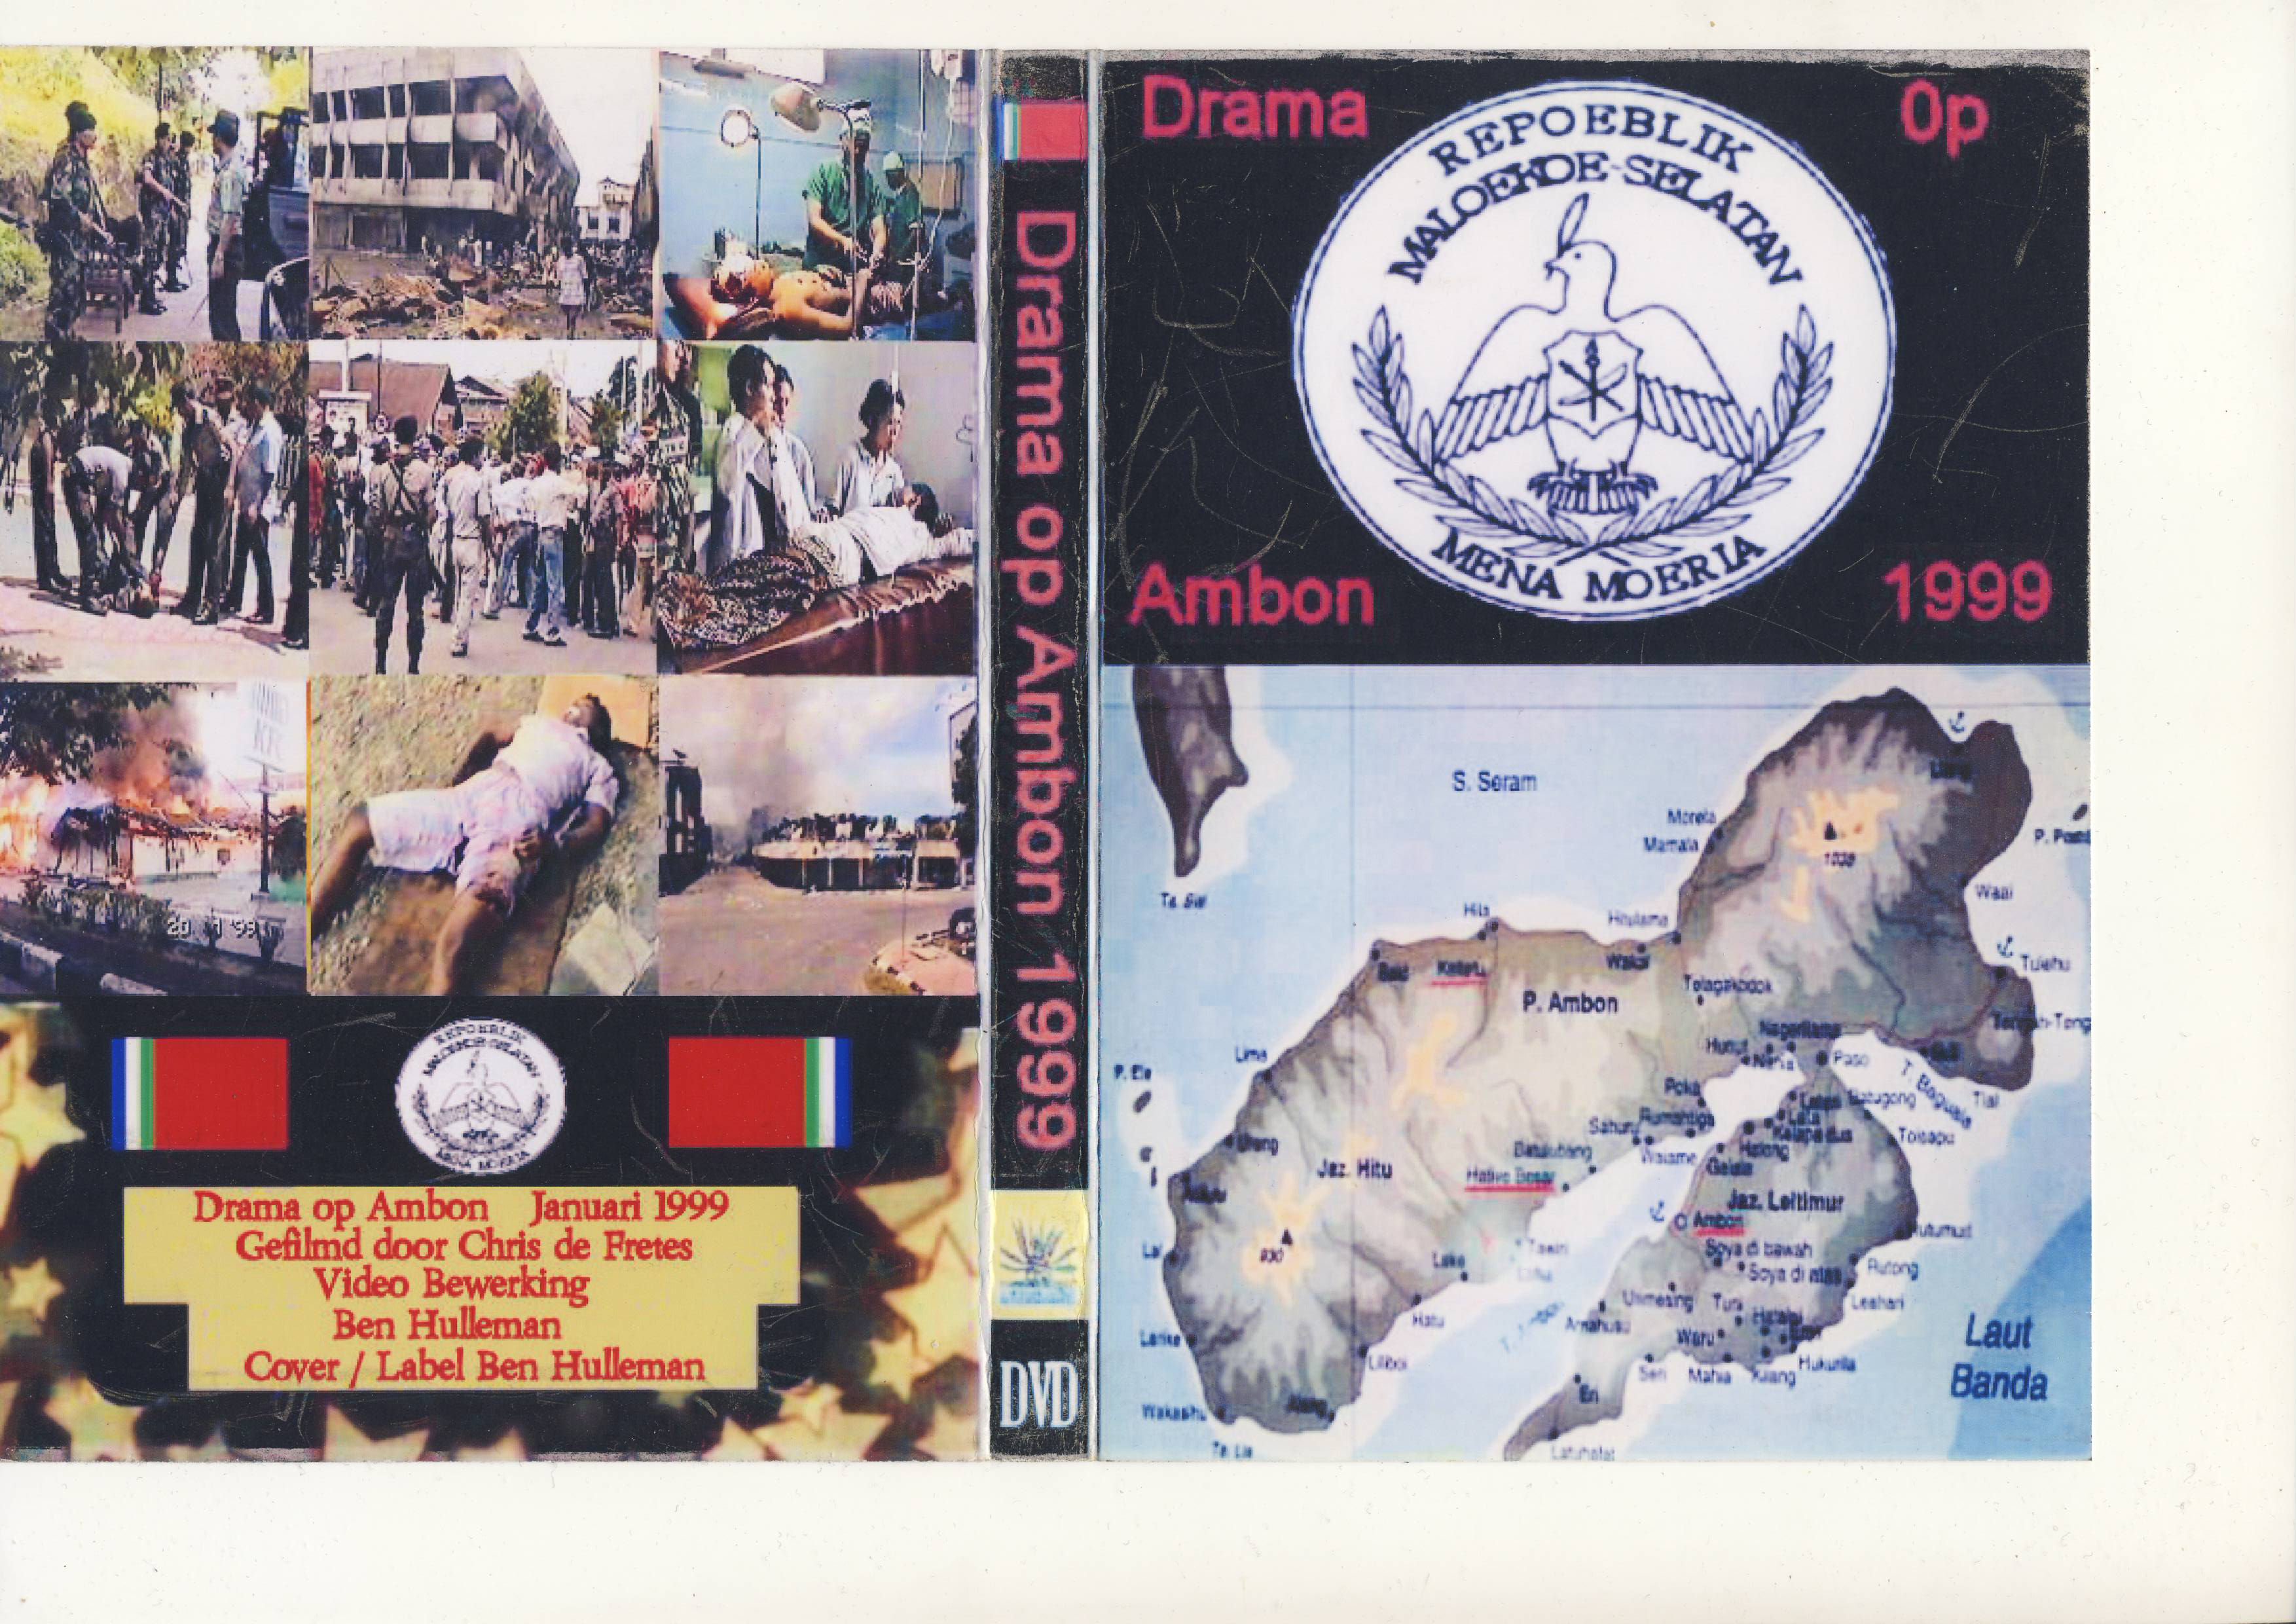 Drama op Ambon Januari 1999